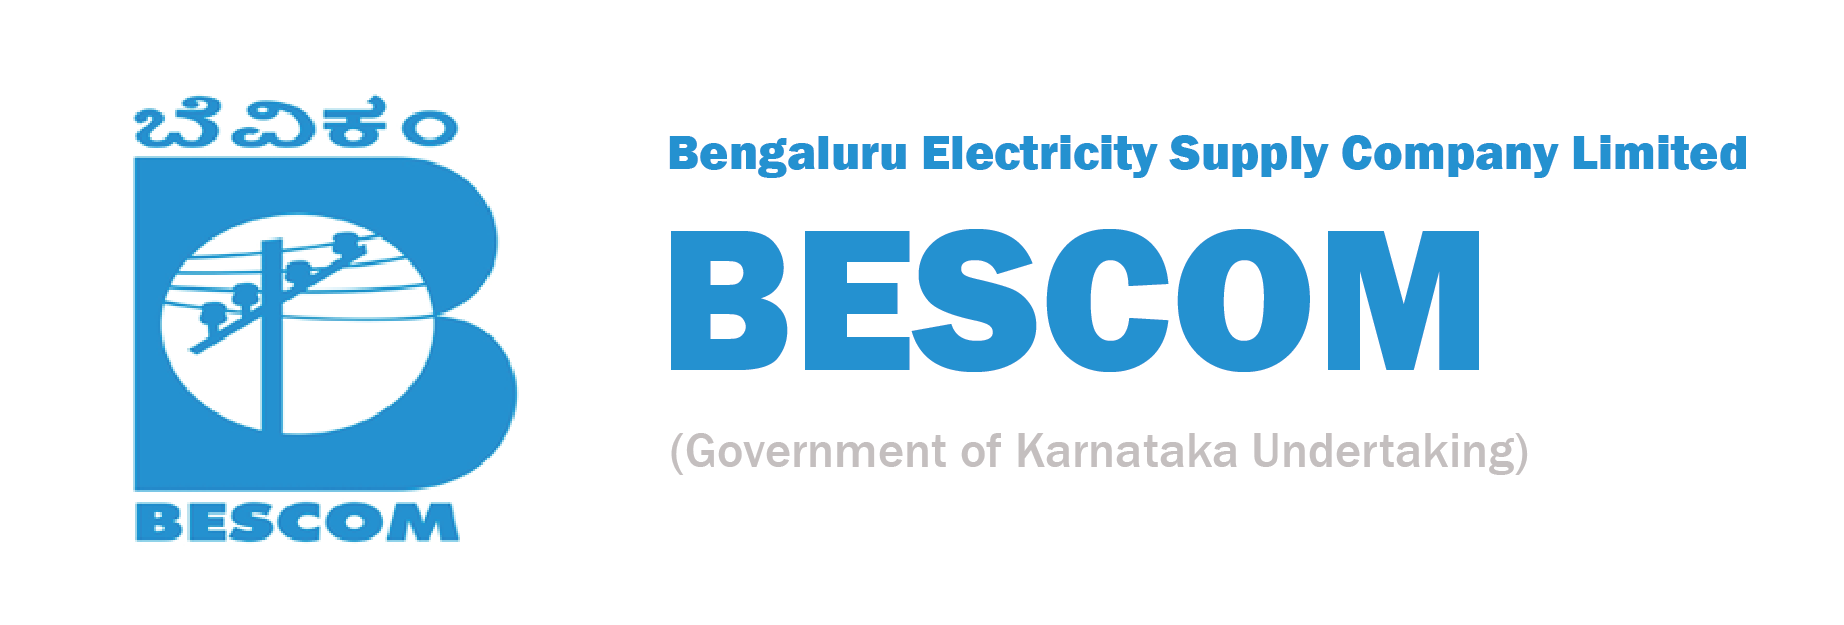 bescom-procedure-to-obtain-solar-rooftop-pv-system-ecosoch-solar